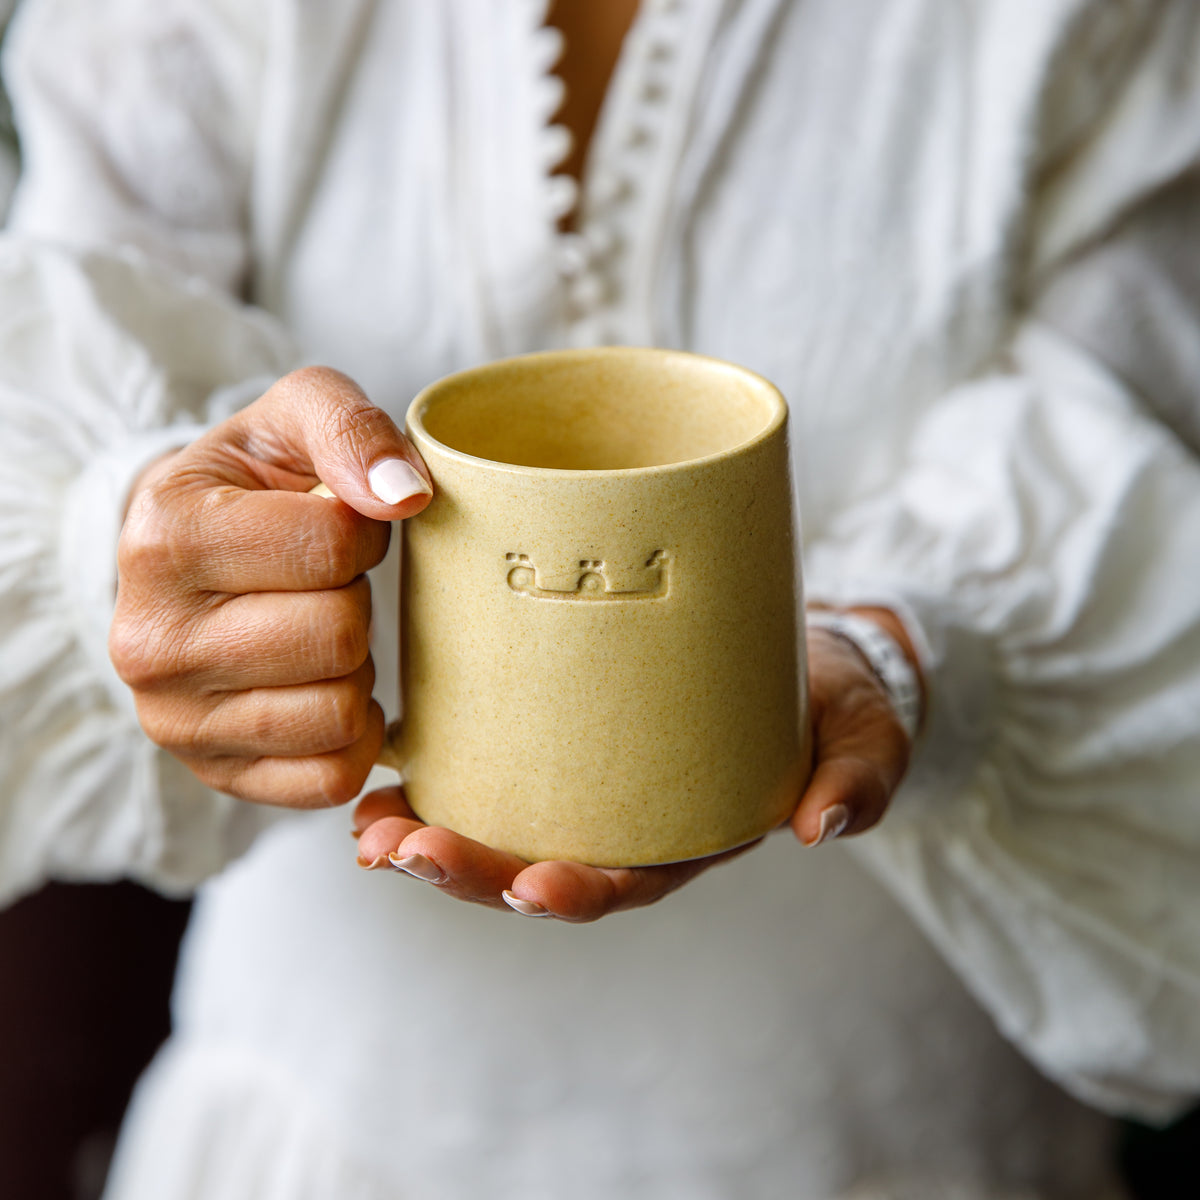 Buy Chai Glasses, Cup Online UAE - Coffee Mugs & Teacups - Curate Home